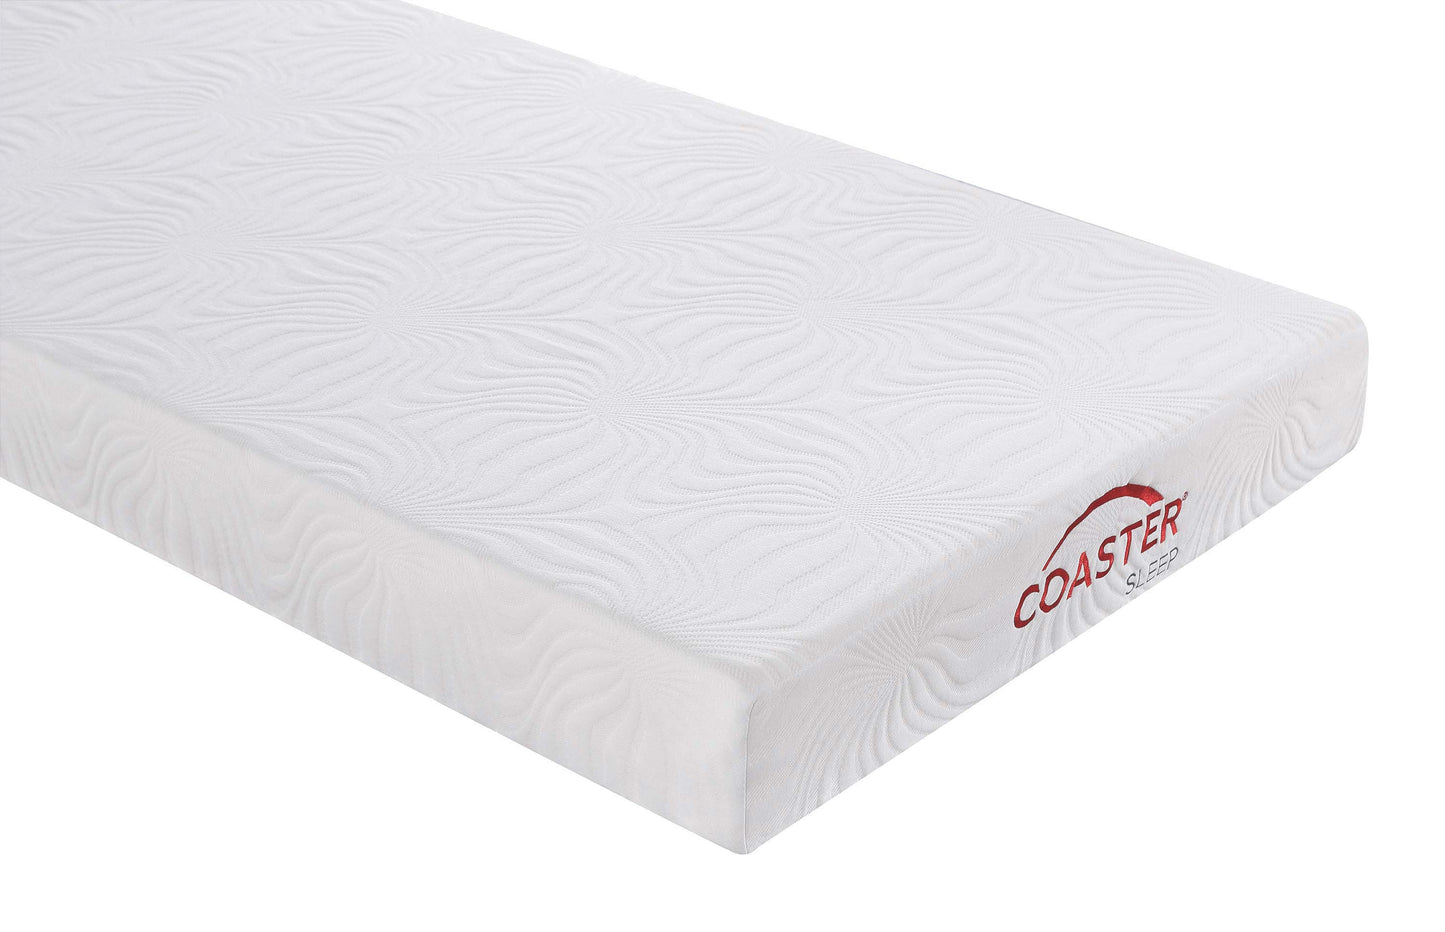 6" full memory foam mattress